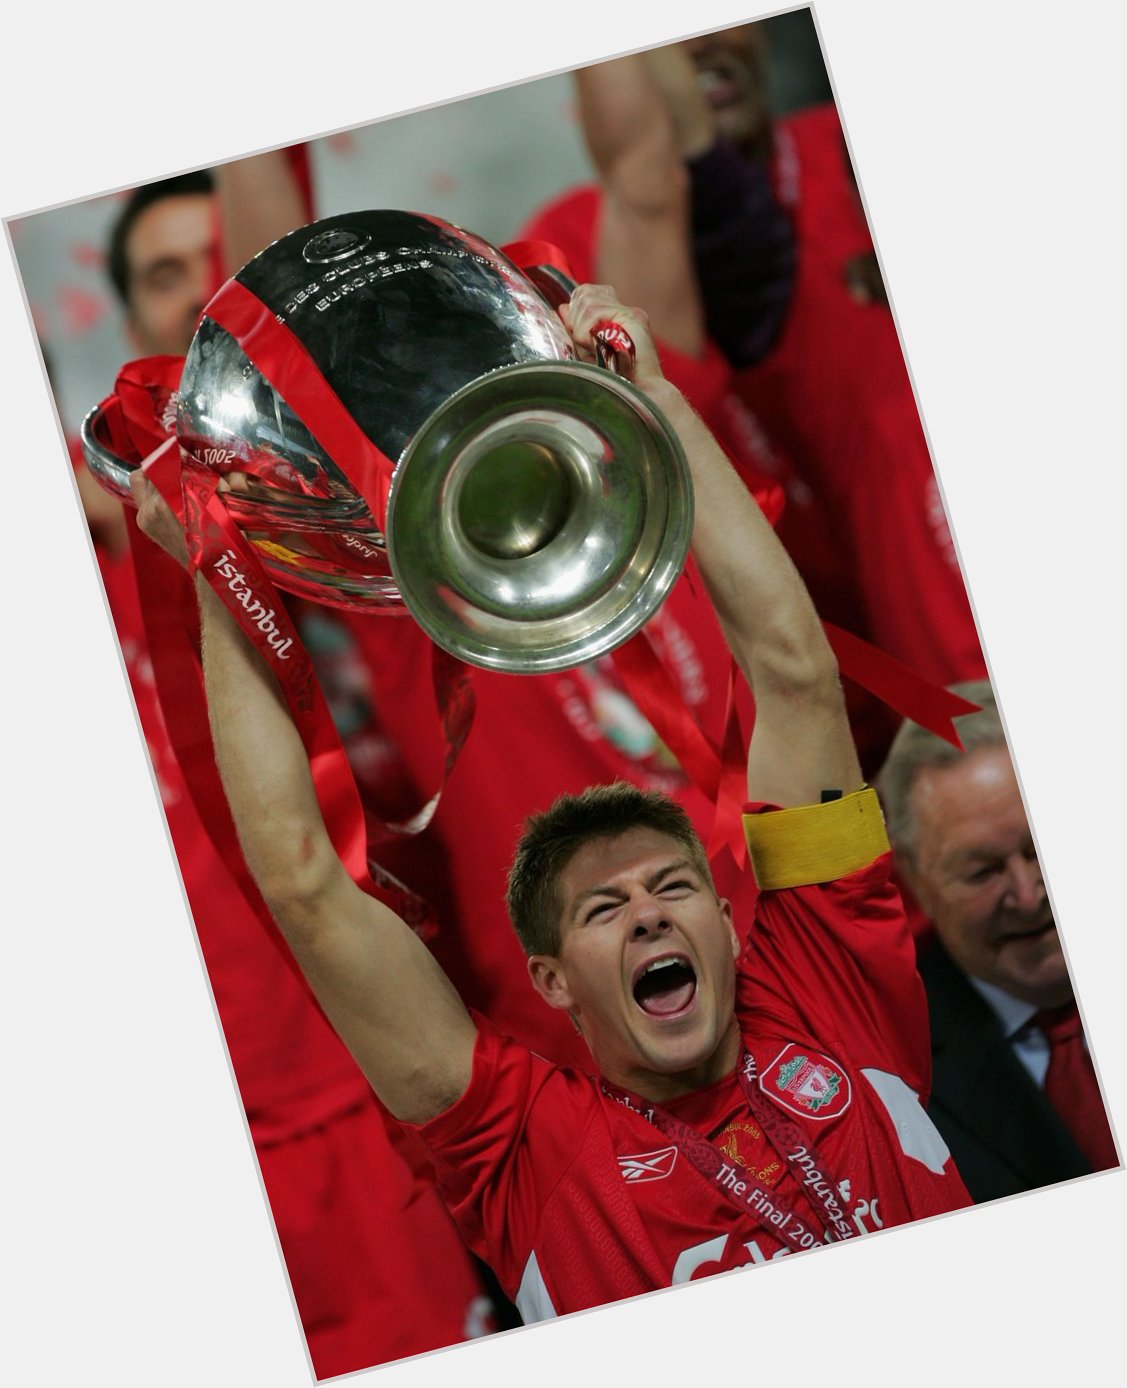 He inspired to glory in 2005... Happy Birthday, Steven Gerrard! 